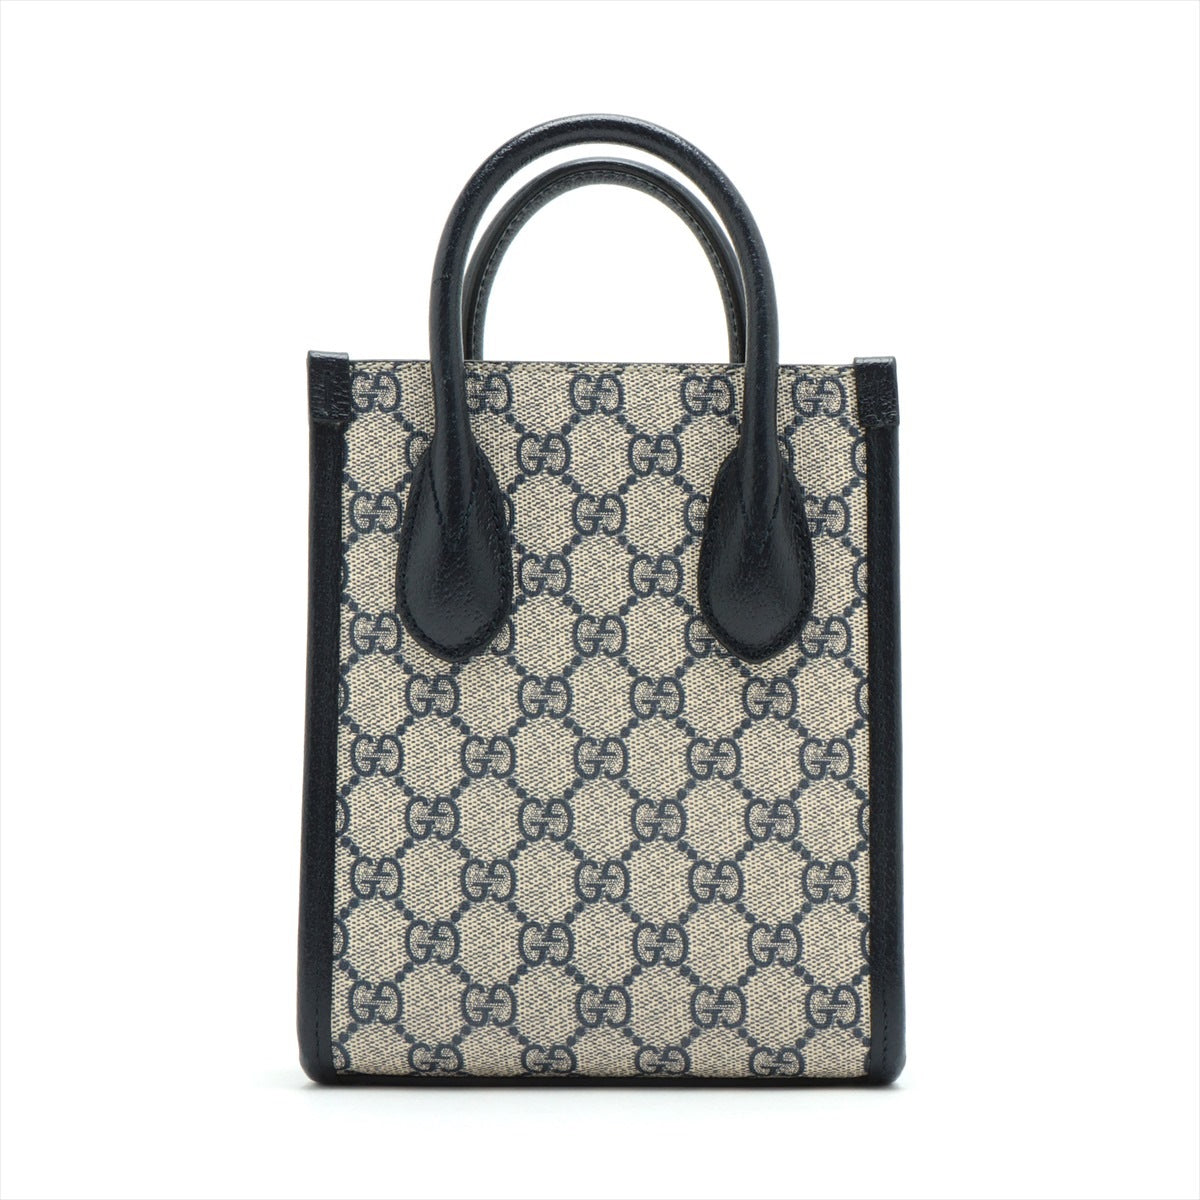 Gucci GG Supreme PVC & leather 2way handbag Navy blue 671623